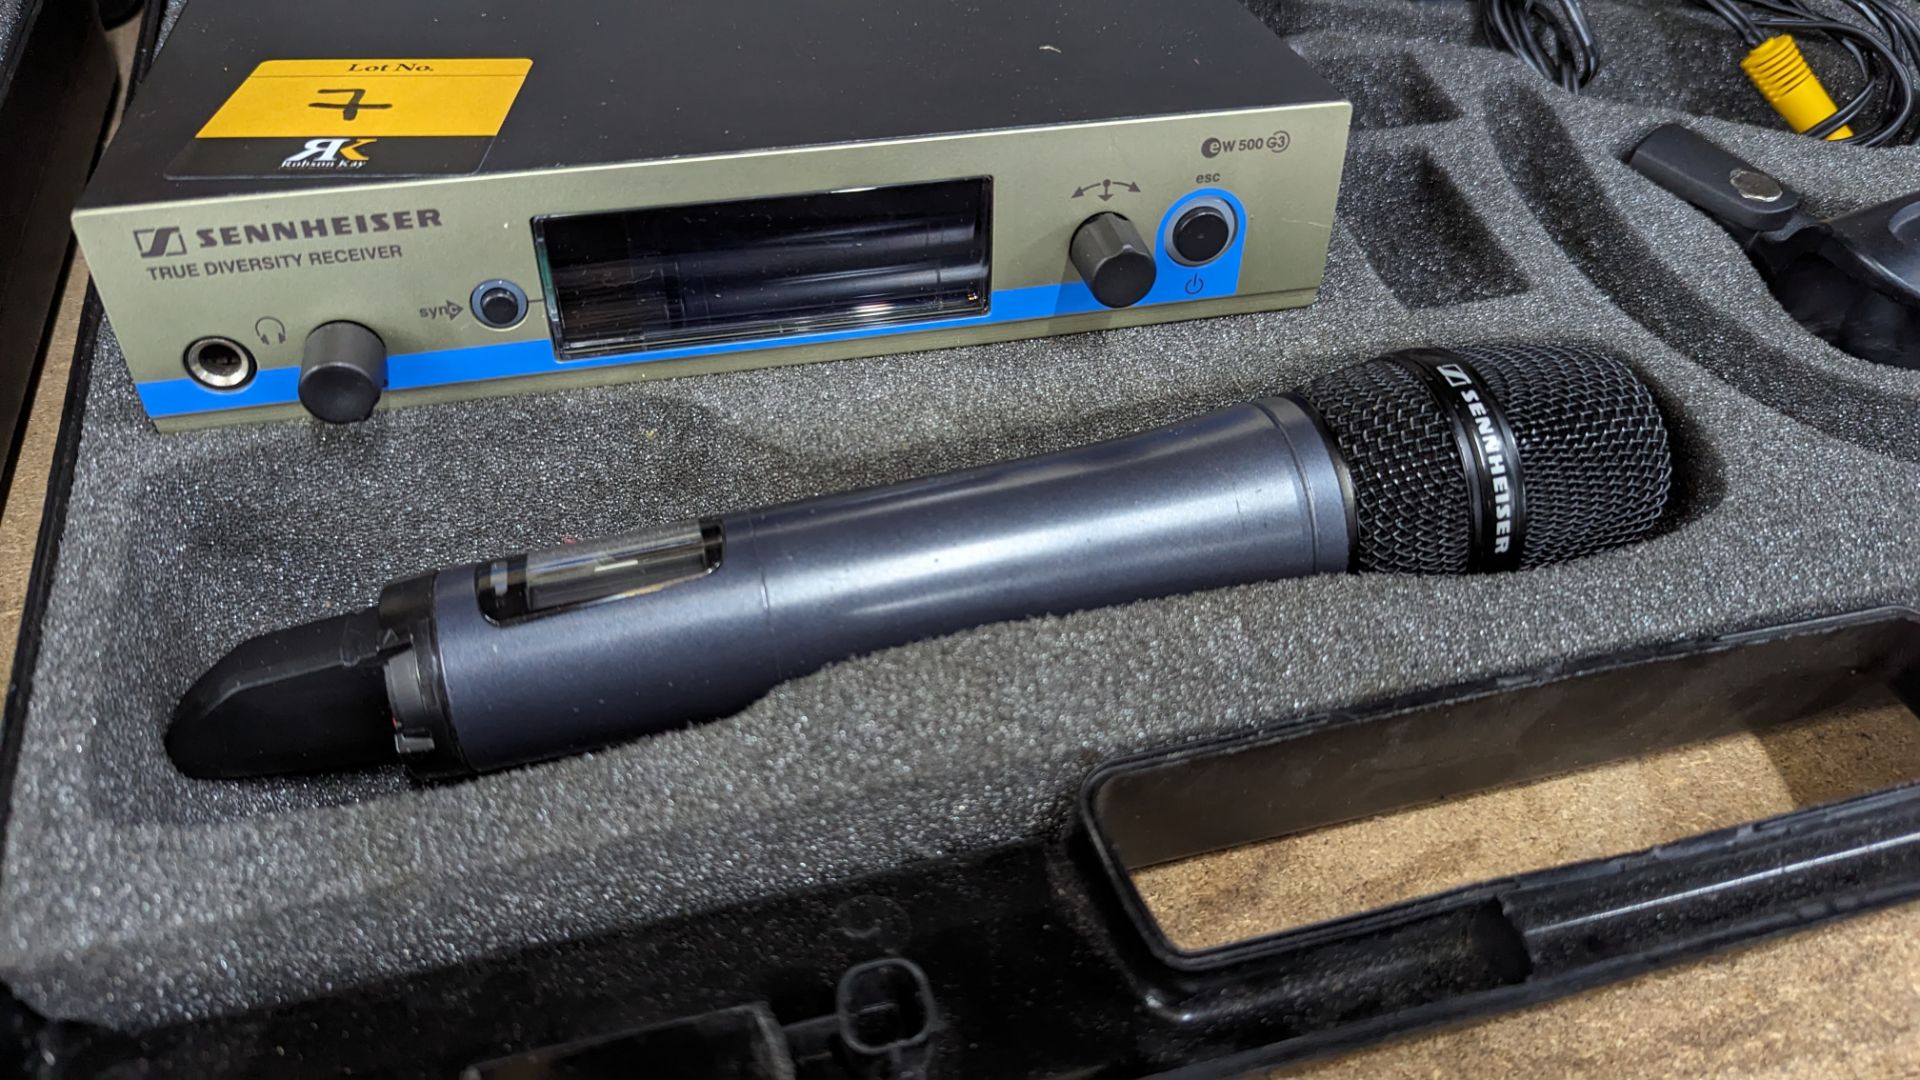 Sennheiser Evolution wireless microphone kit comprising 1 off Sennheiser model EW500 G3 true diversi - Image 7 of 12